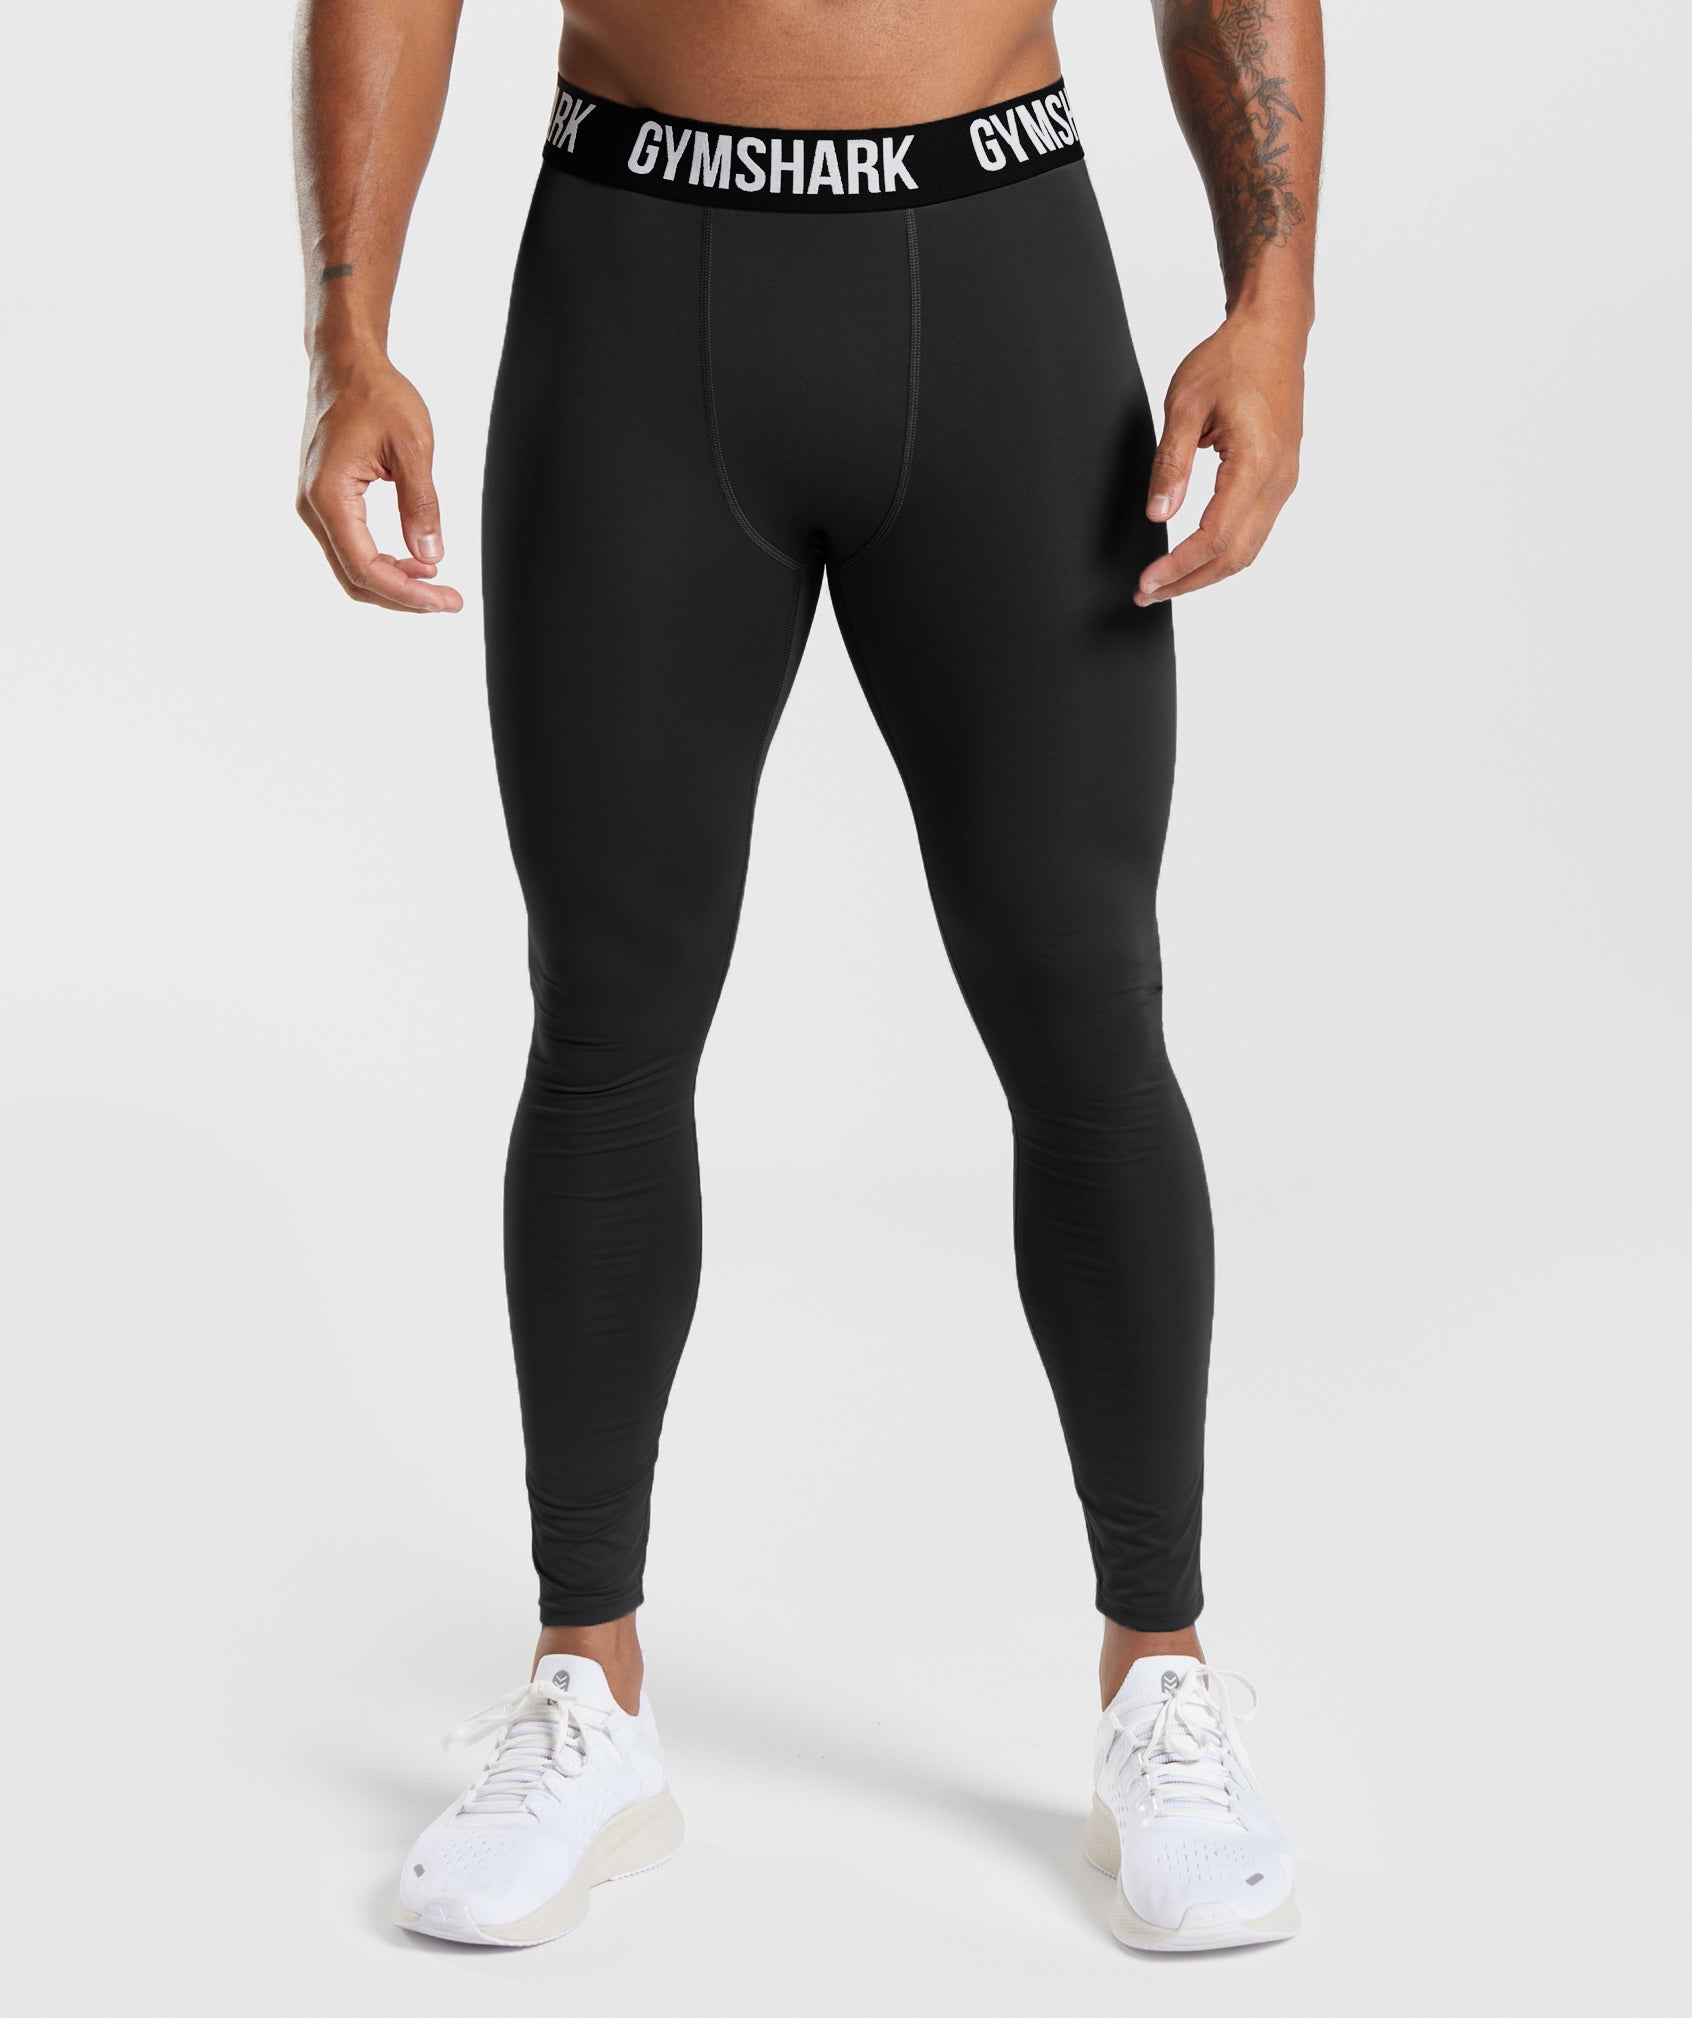 Quick Dry Skinny Running Tights Men Compression Fitness Crossfit Training Gym  Leggings Sports Jogging Long Yoga Athletic Pants Color: black orange, Size:  EU size XL